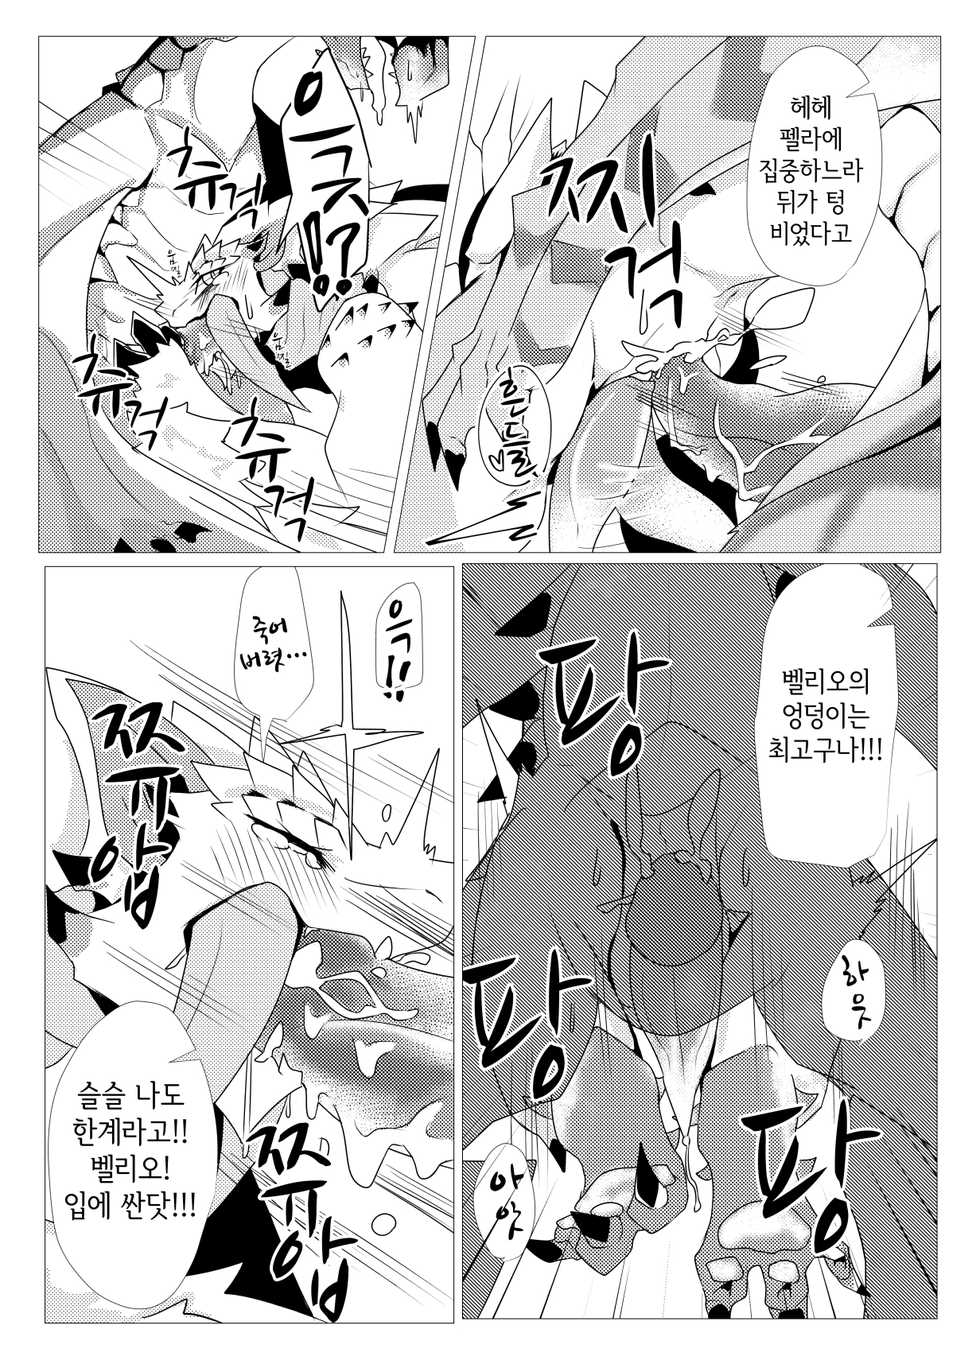 [Feruta] Barioth stuck in wall manga | 벨리오로스 벽에 끼인 만화 (Monster Hunter) [Korean] [Uncensored] - Page 10